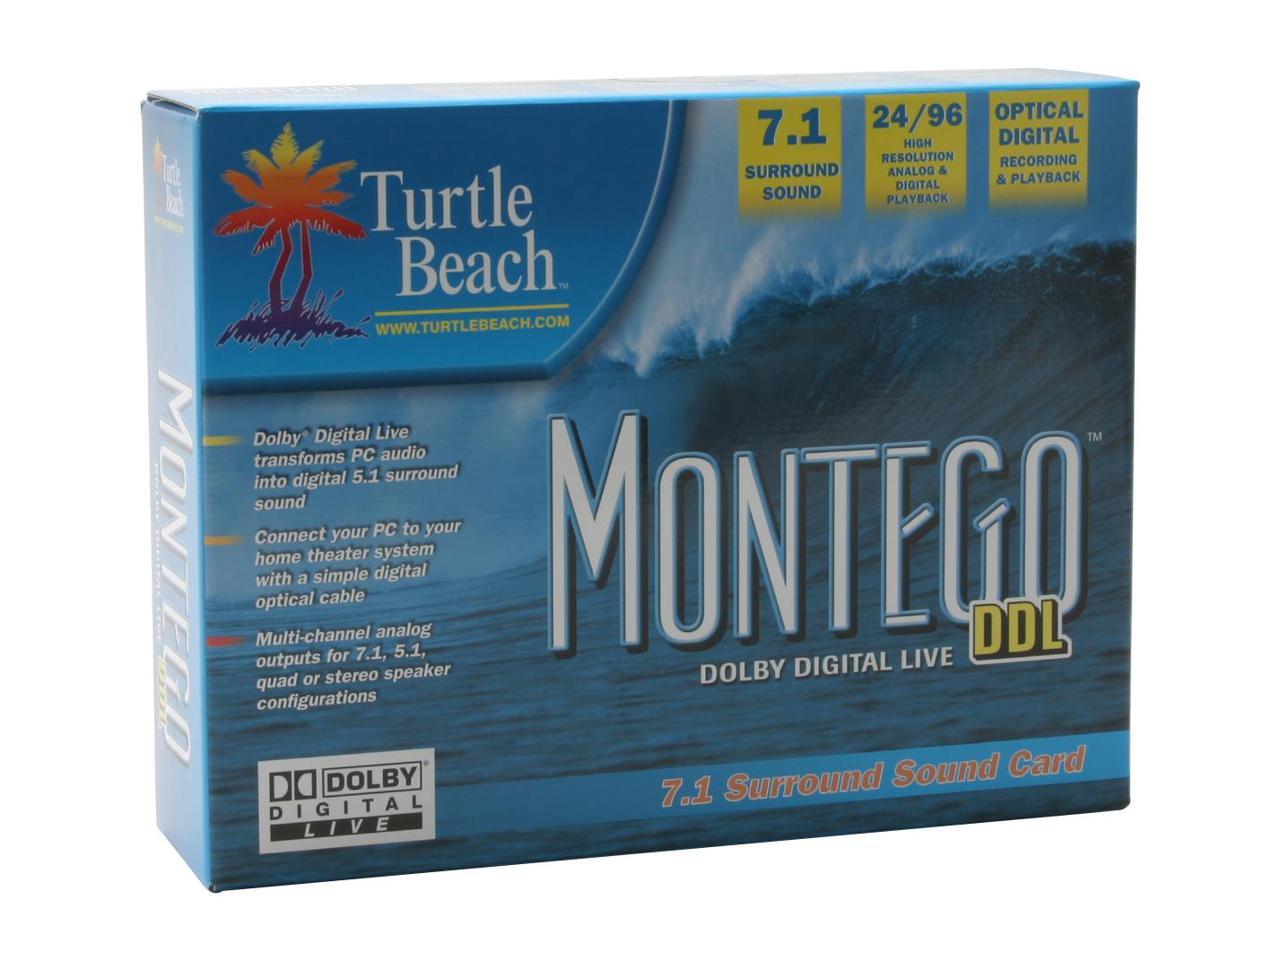 turtle beach montego ddl pci drivers